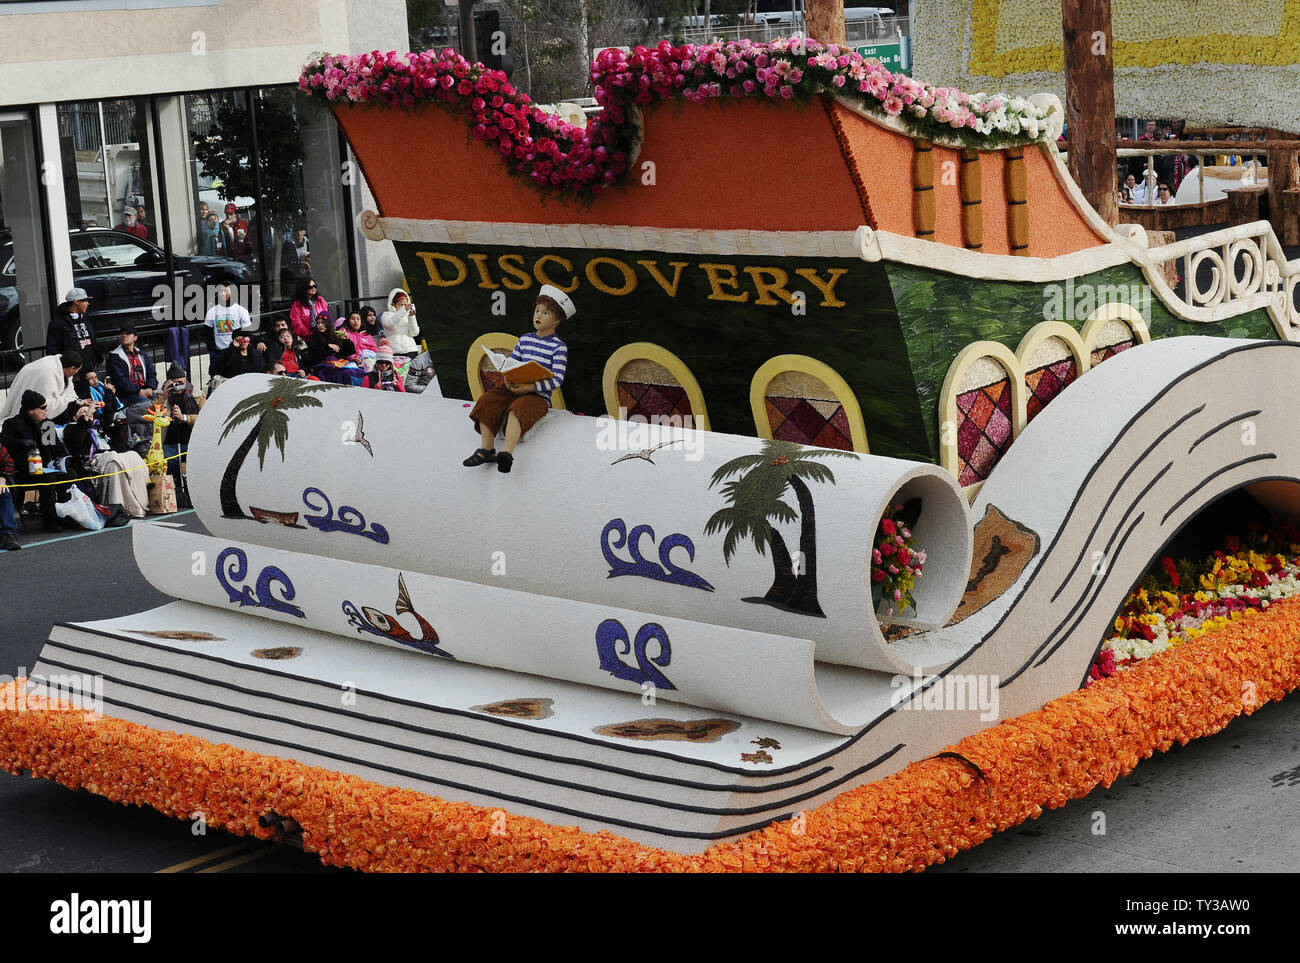 WINNER: South Pasadena Rose Parade Float Wins the 'Founder Award